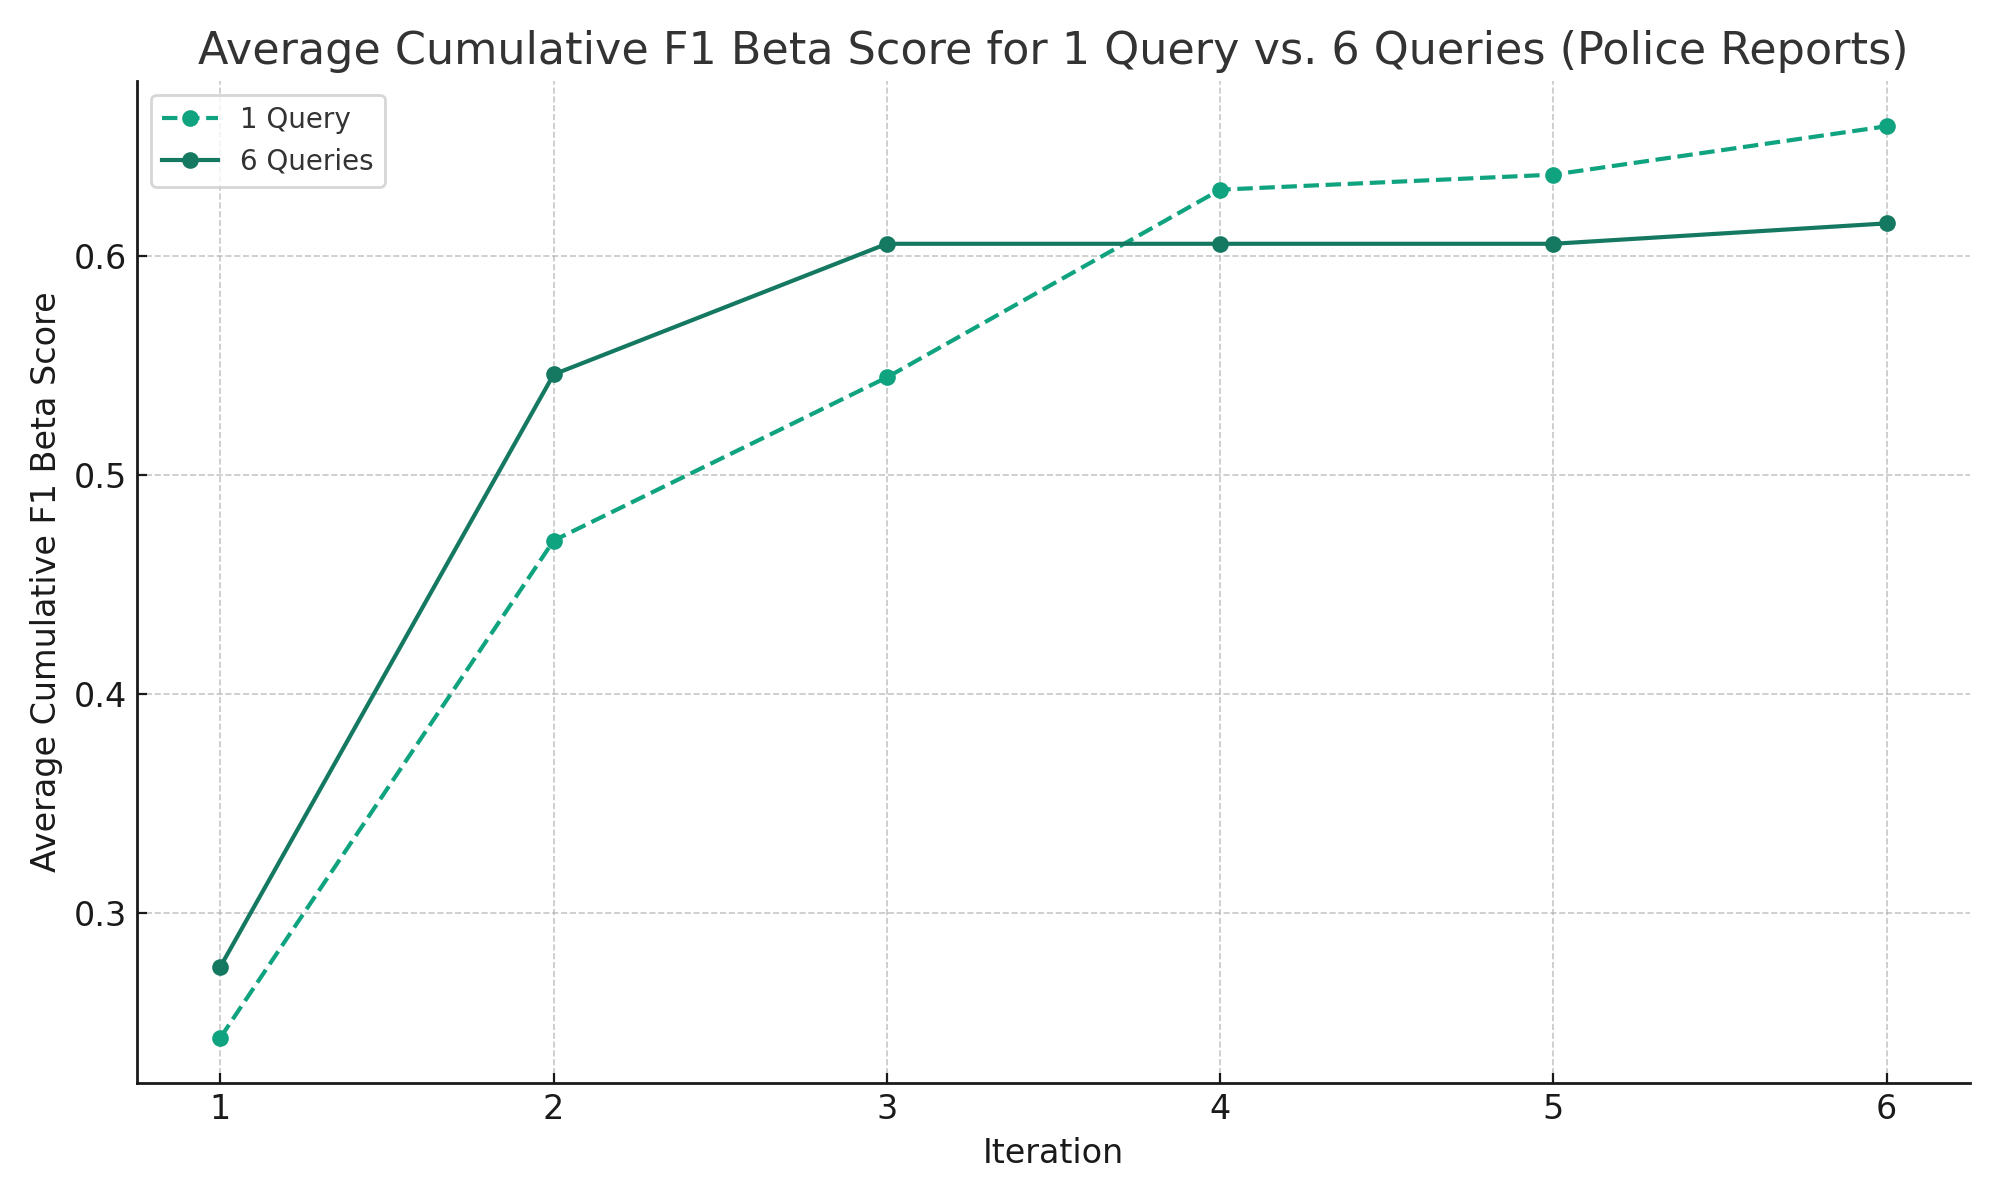 Figure 1: Average Cumulative F1 Beta Score for 1 Query vs. 6 Queries (Police Reports)